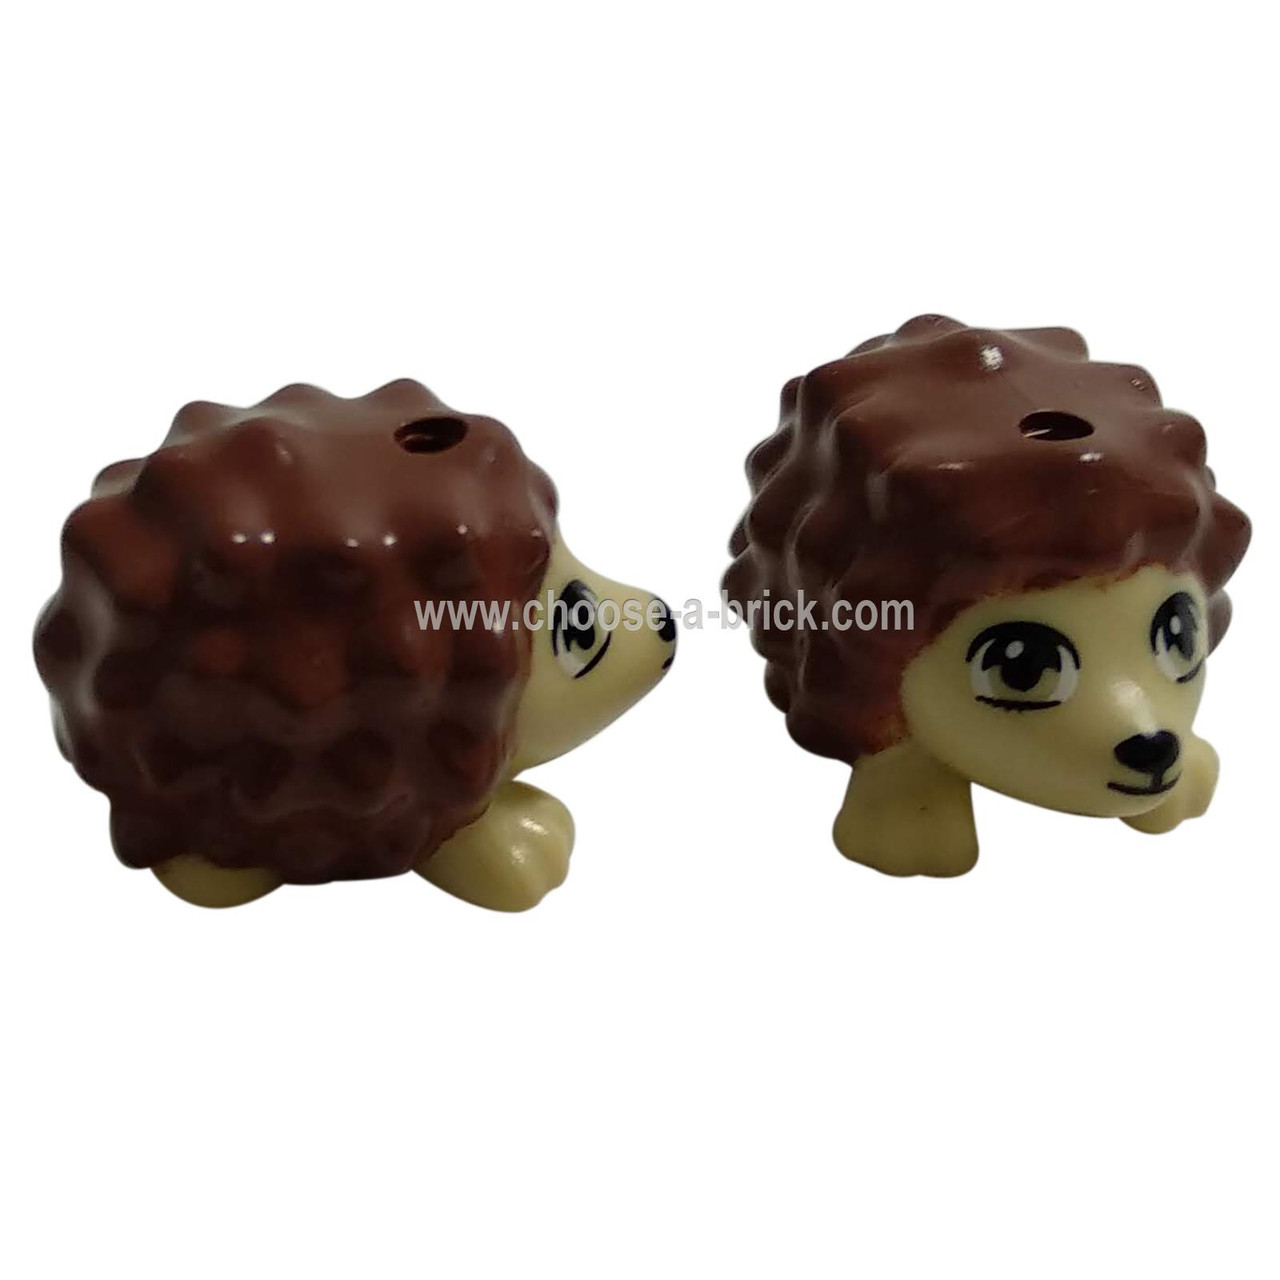 ☀️NEW Lego Hedgehog Friends w/ Black Eyes & Nose & Reddish Brown Spines Oscar 